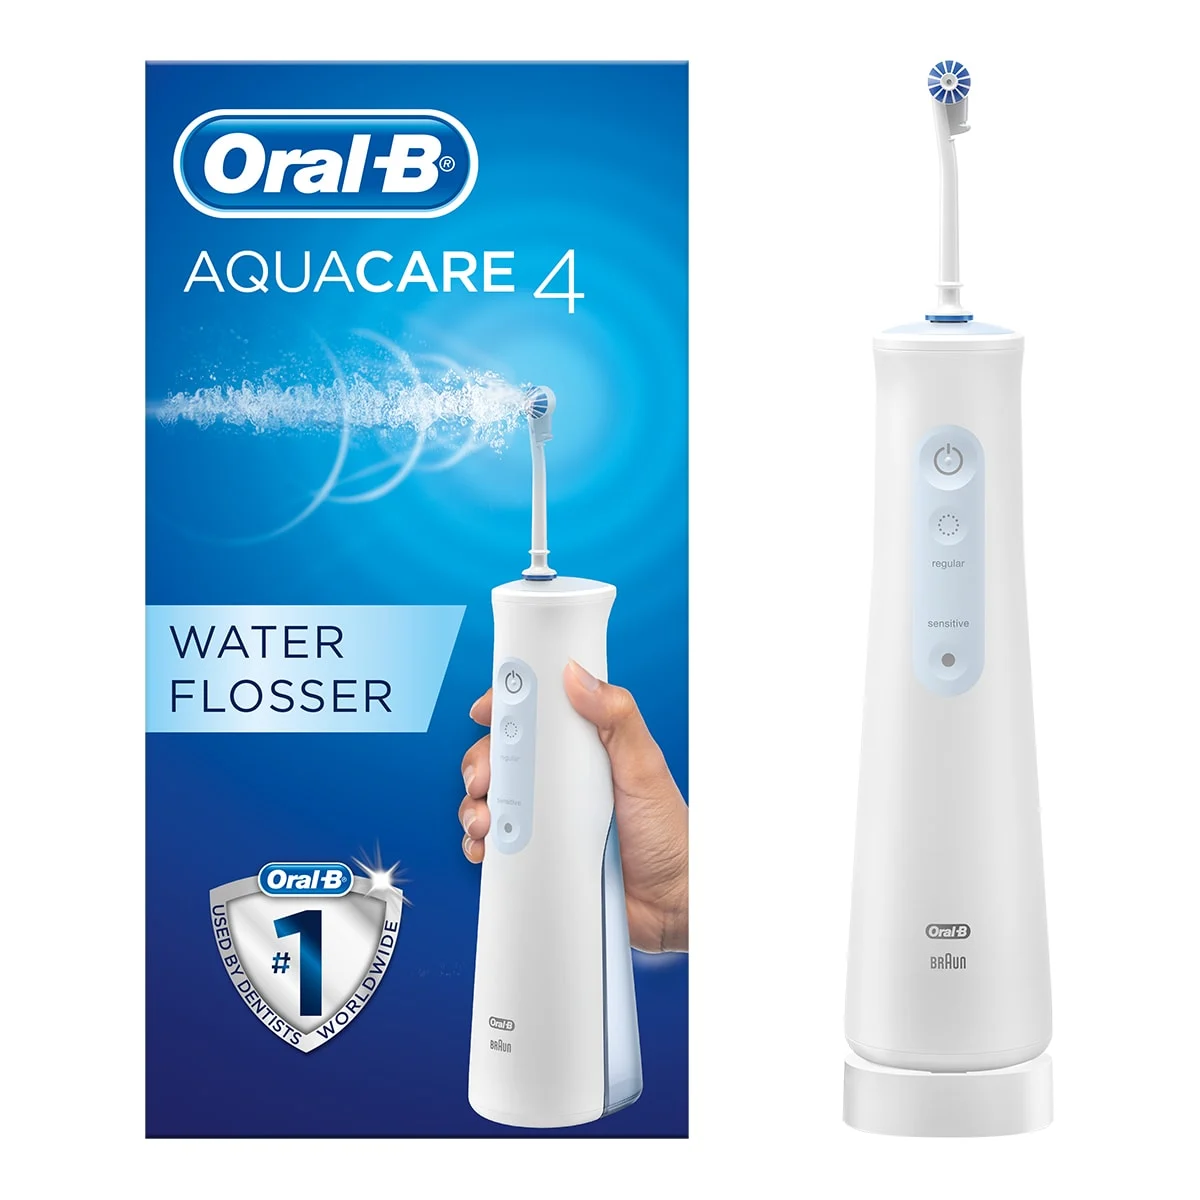 Oral-B Aquacare Irrigator Featuring Oxyjet Technology 